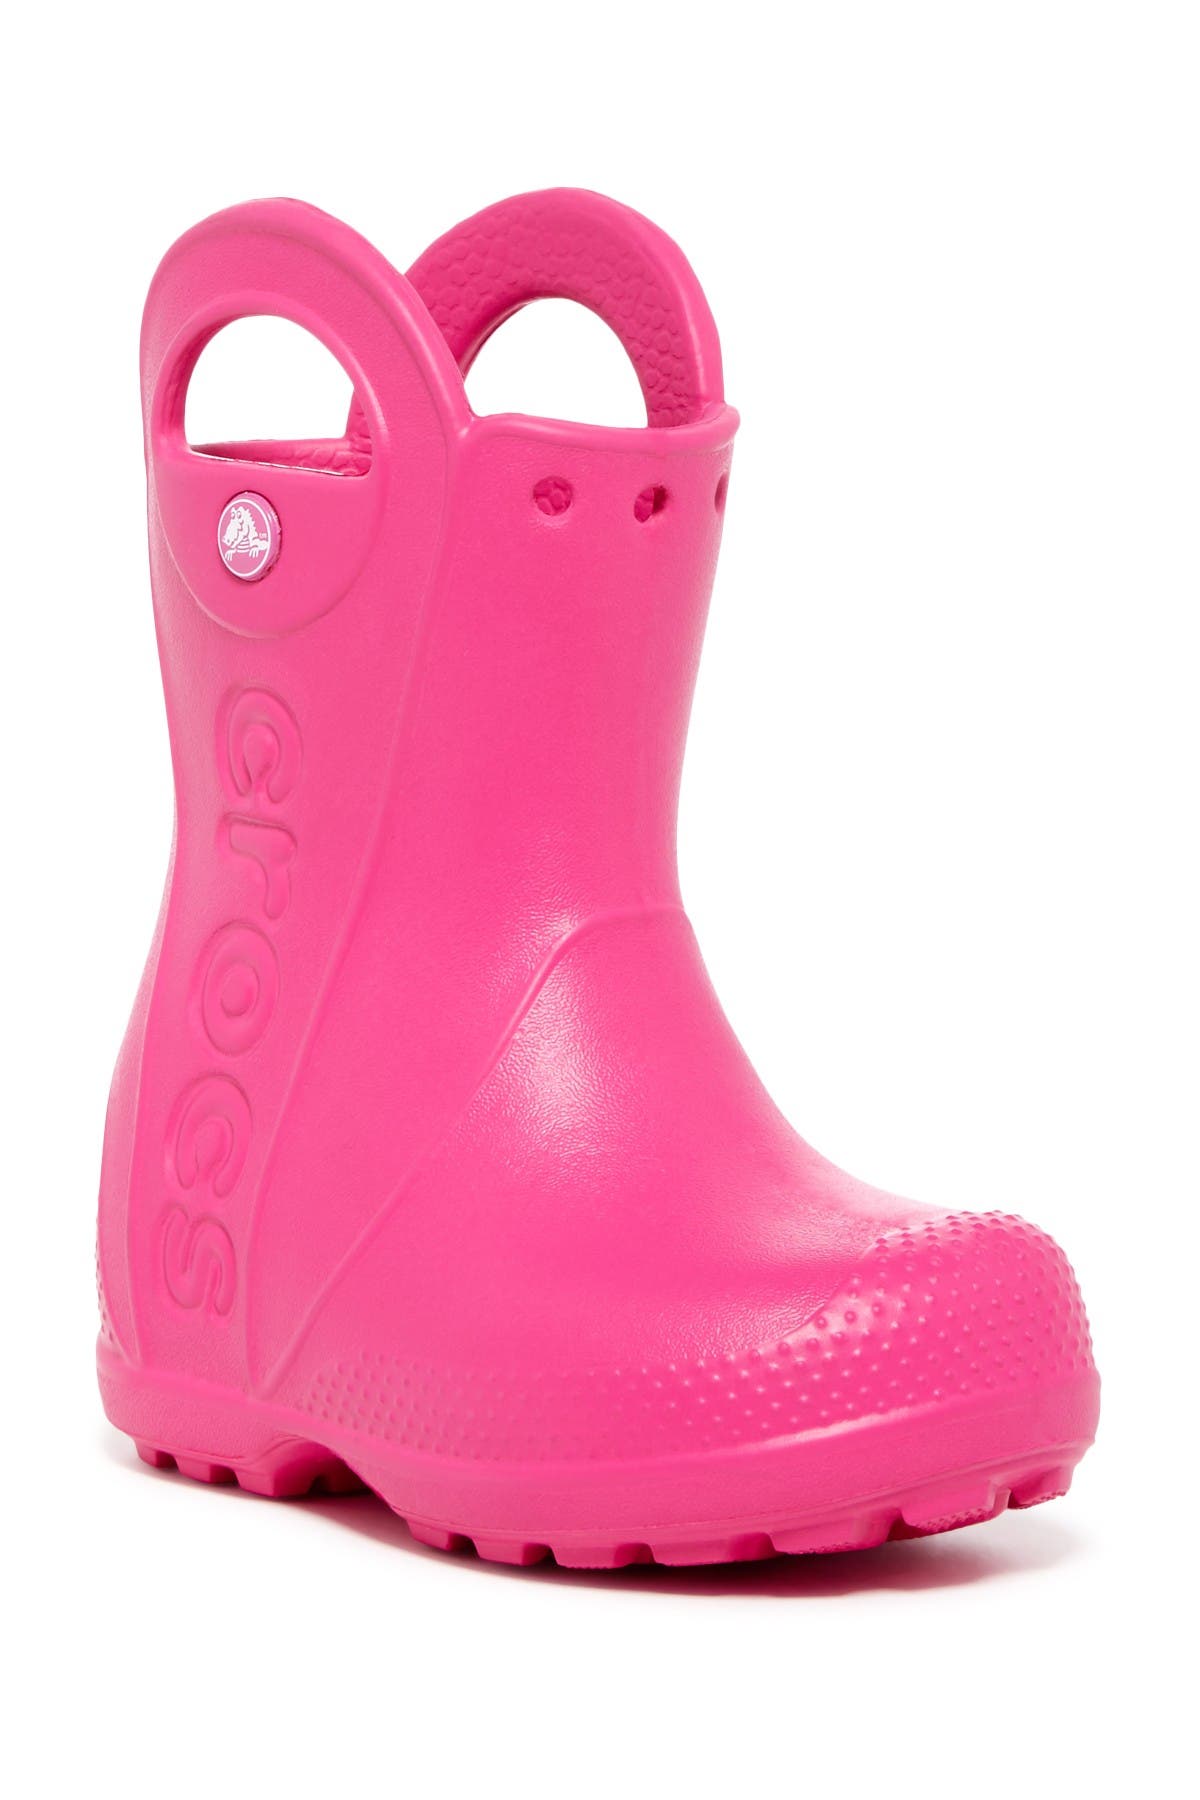 crocs winter boots toddler